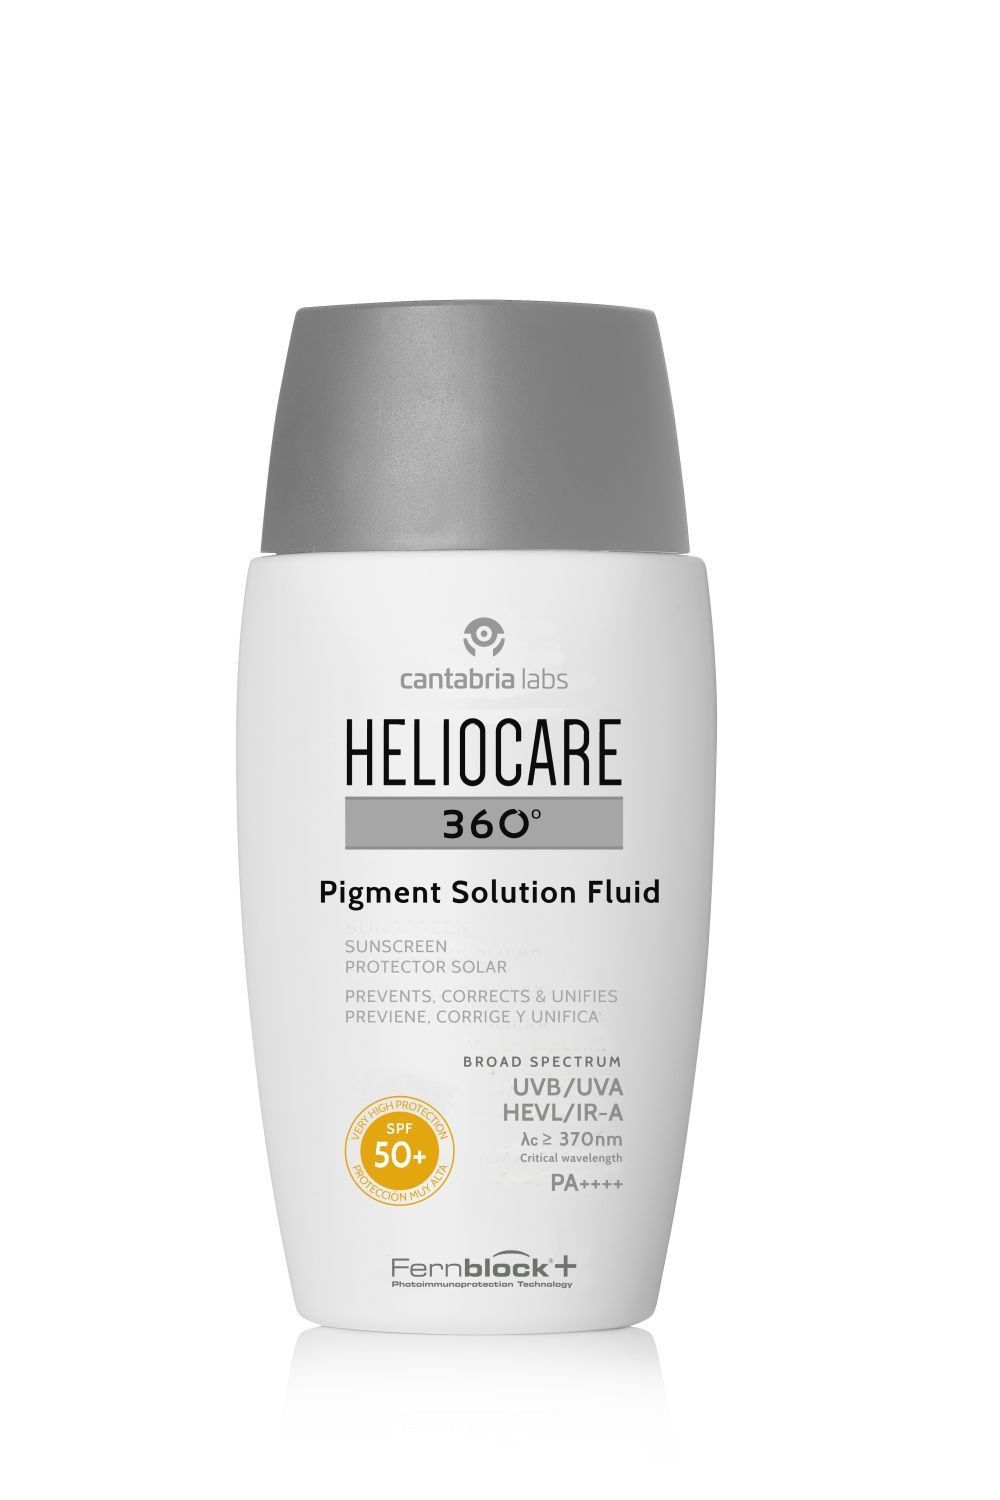 Heliocare 360 Age Active Fluid. 31,90 euros.